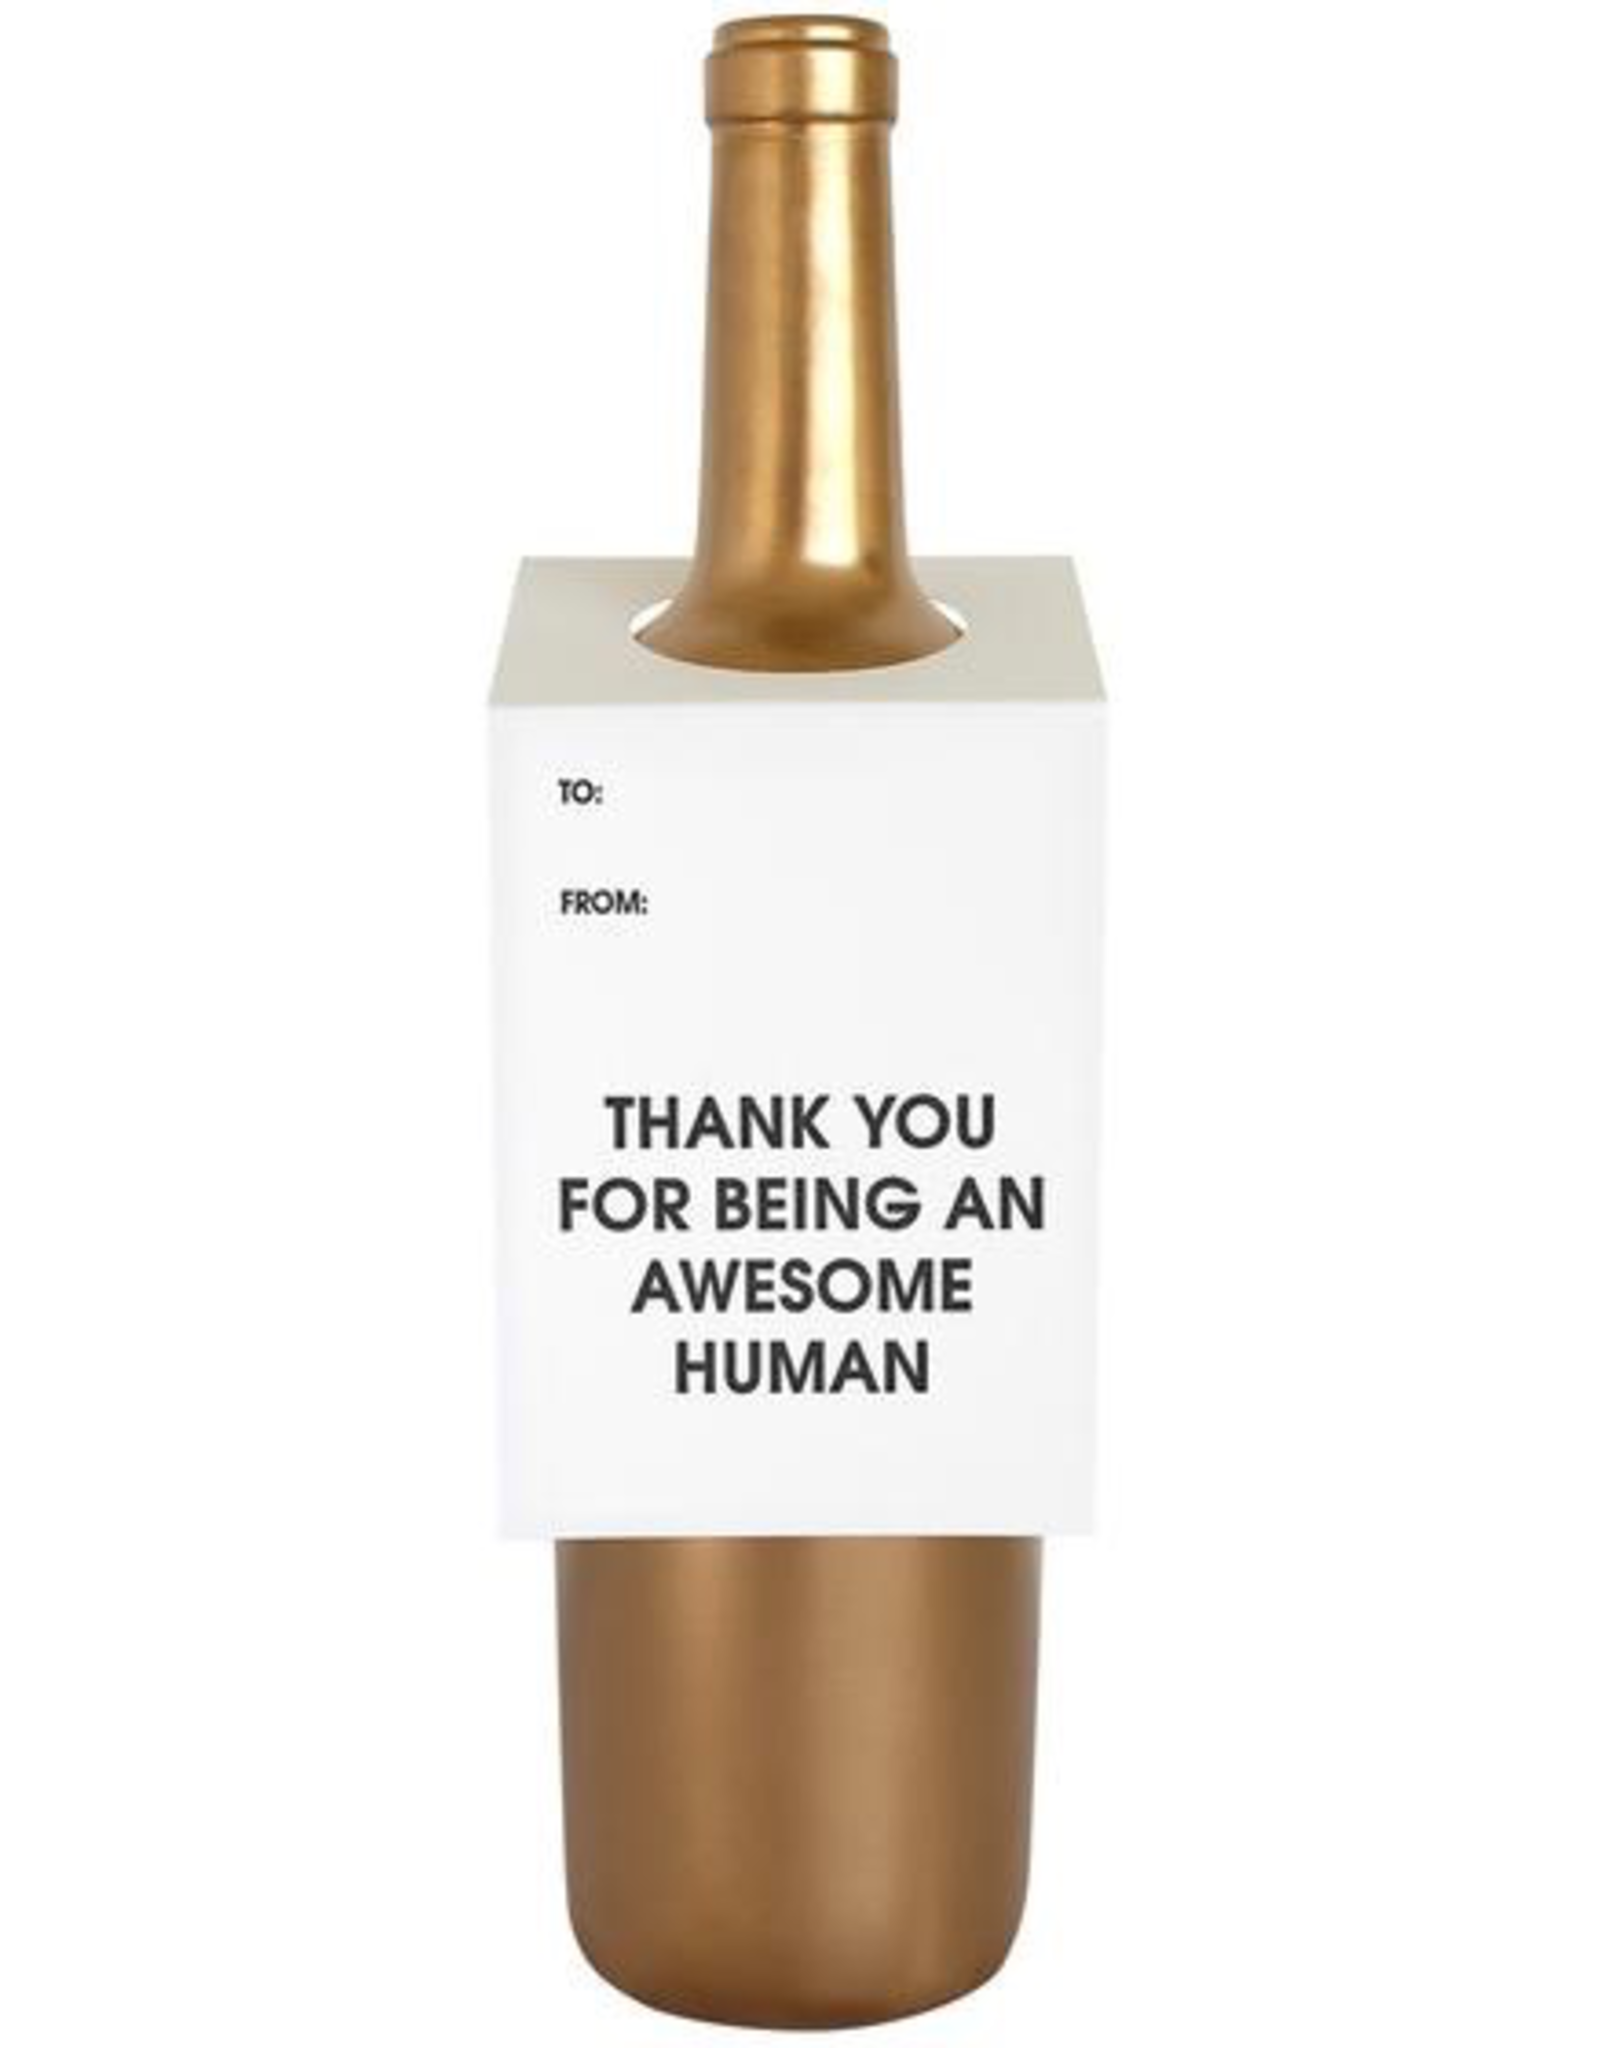 Awesome Human Wine Tag Card